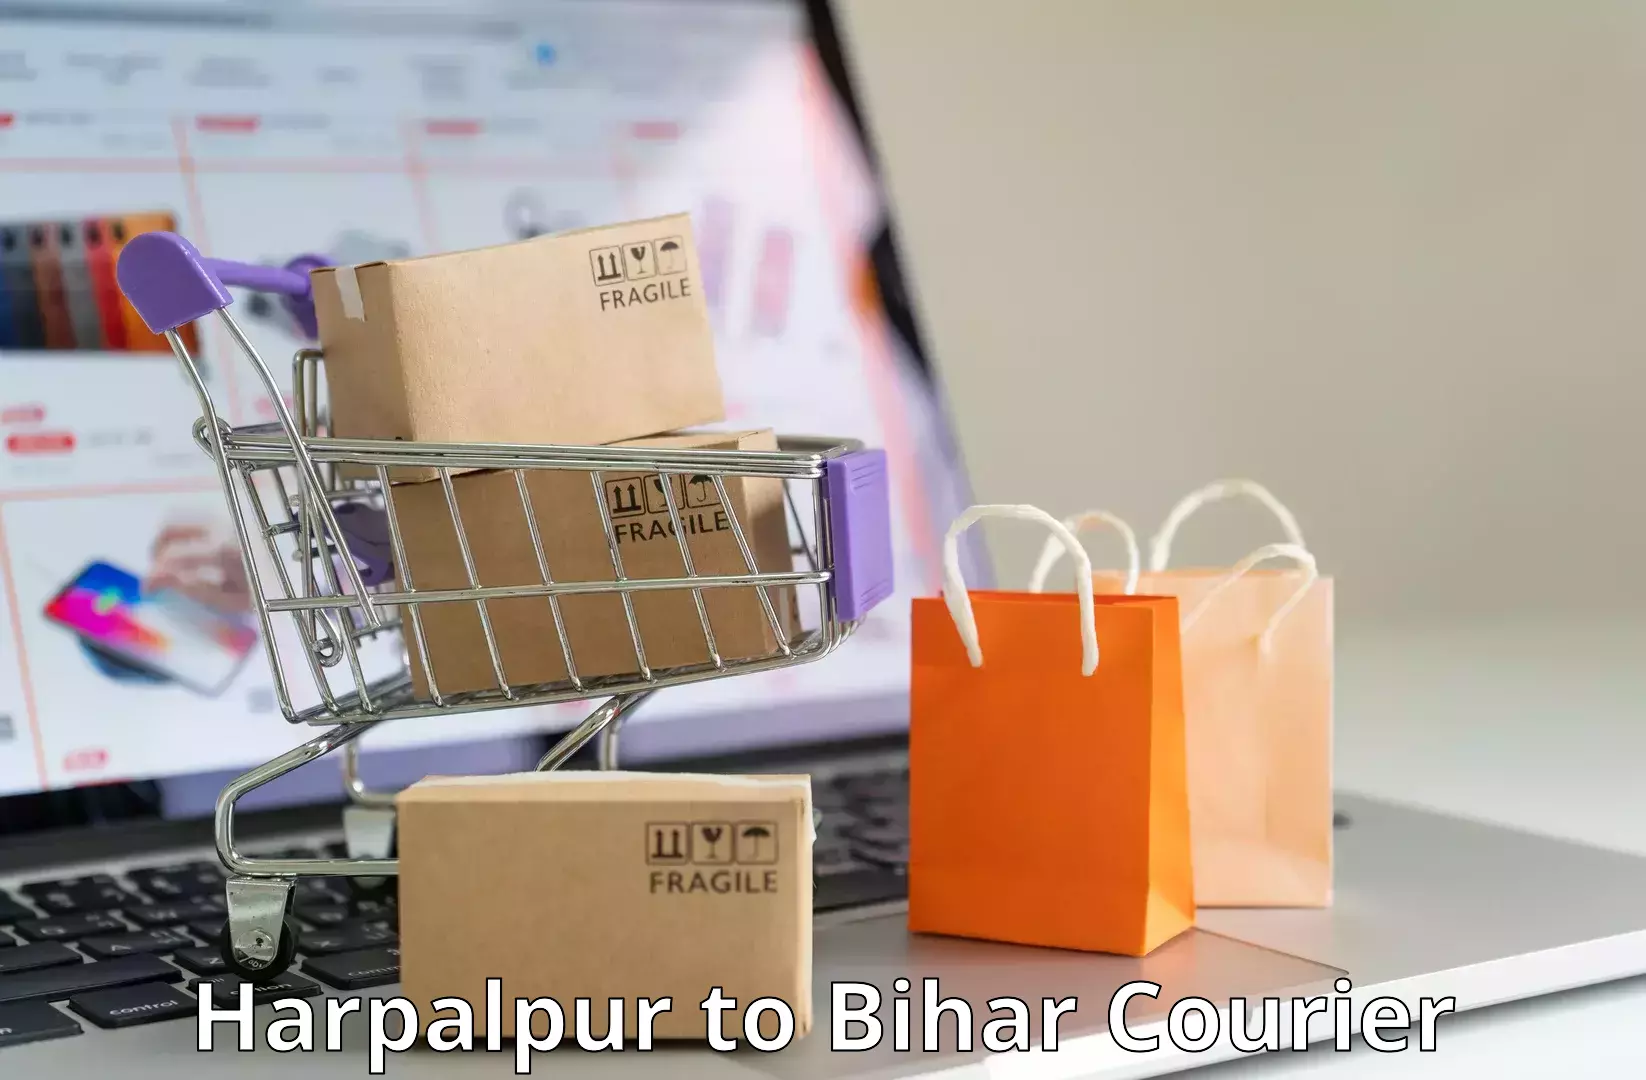 Advanced shipping network Harpalpur to Vaishali